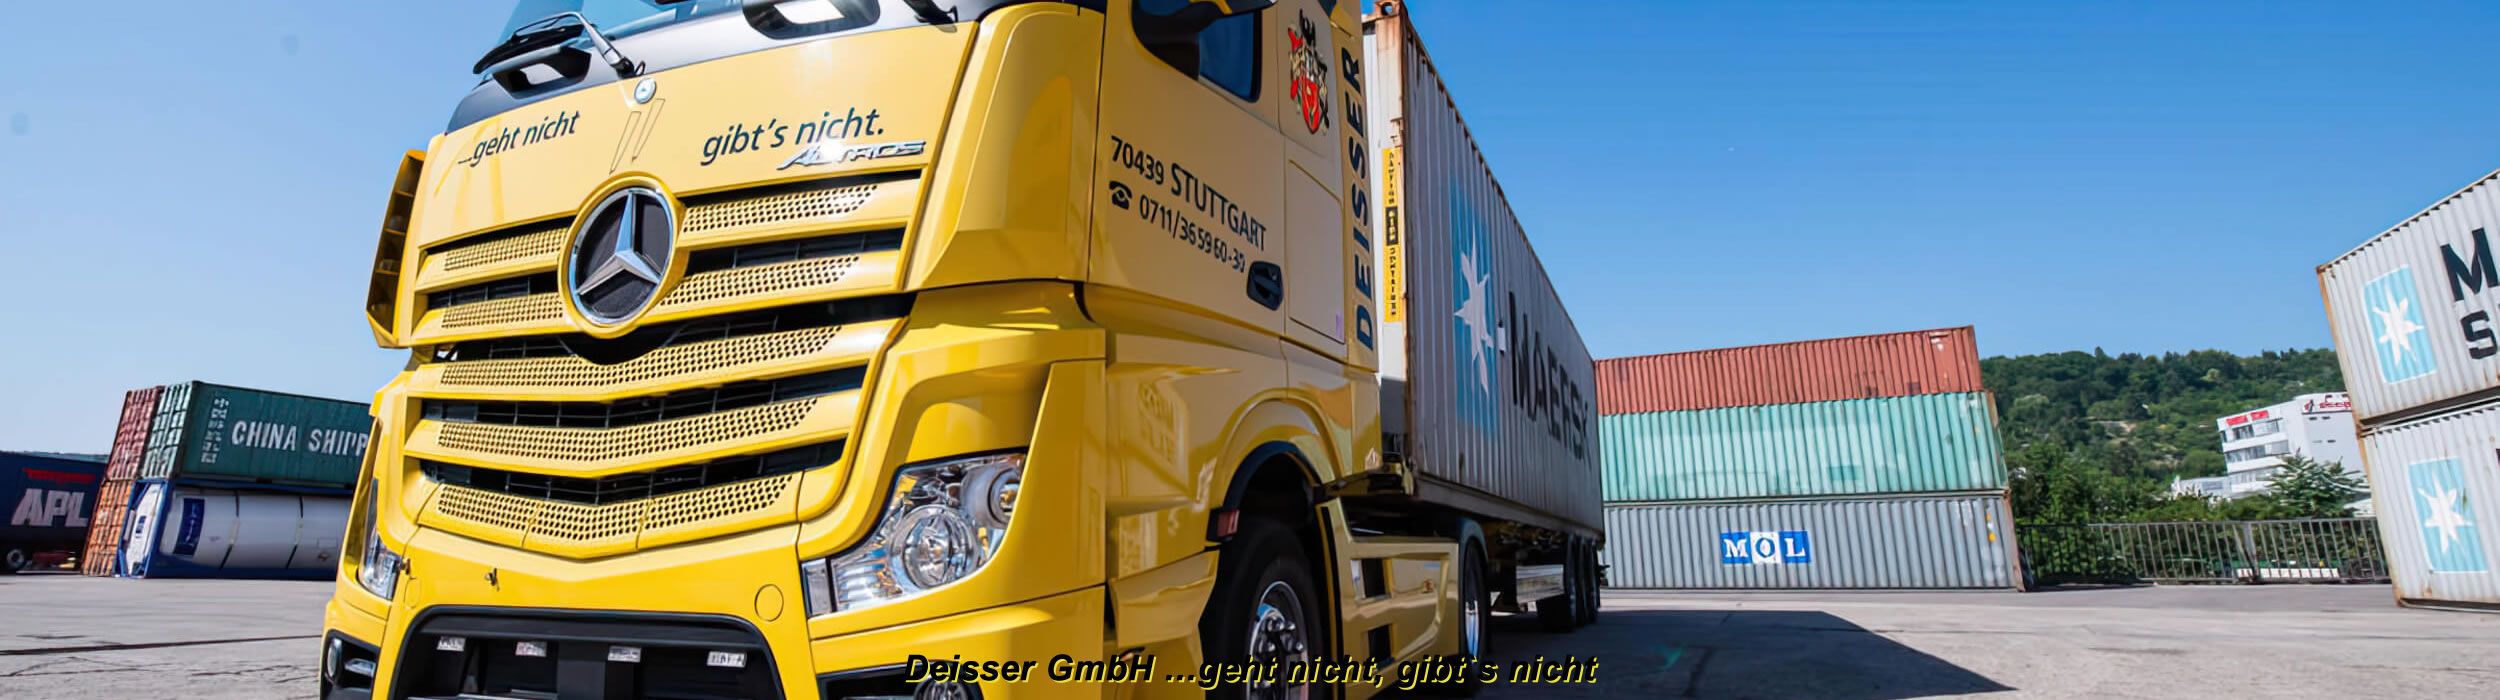 Deisser GmbH / Transportlogistik Seecontainer / Kontakt